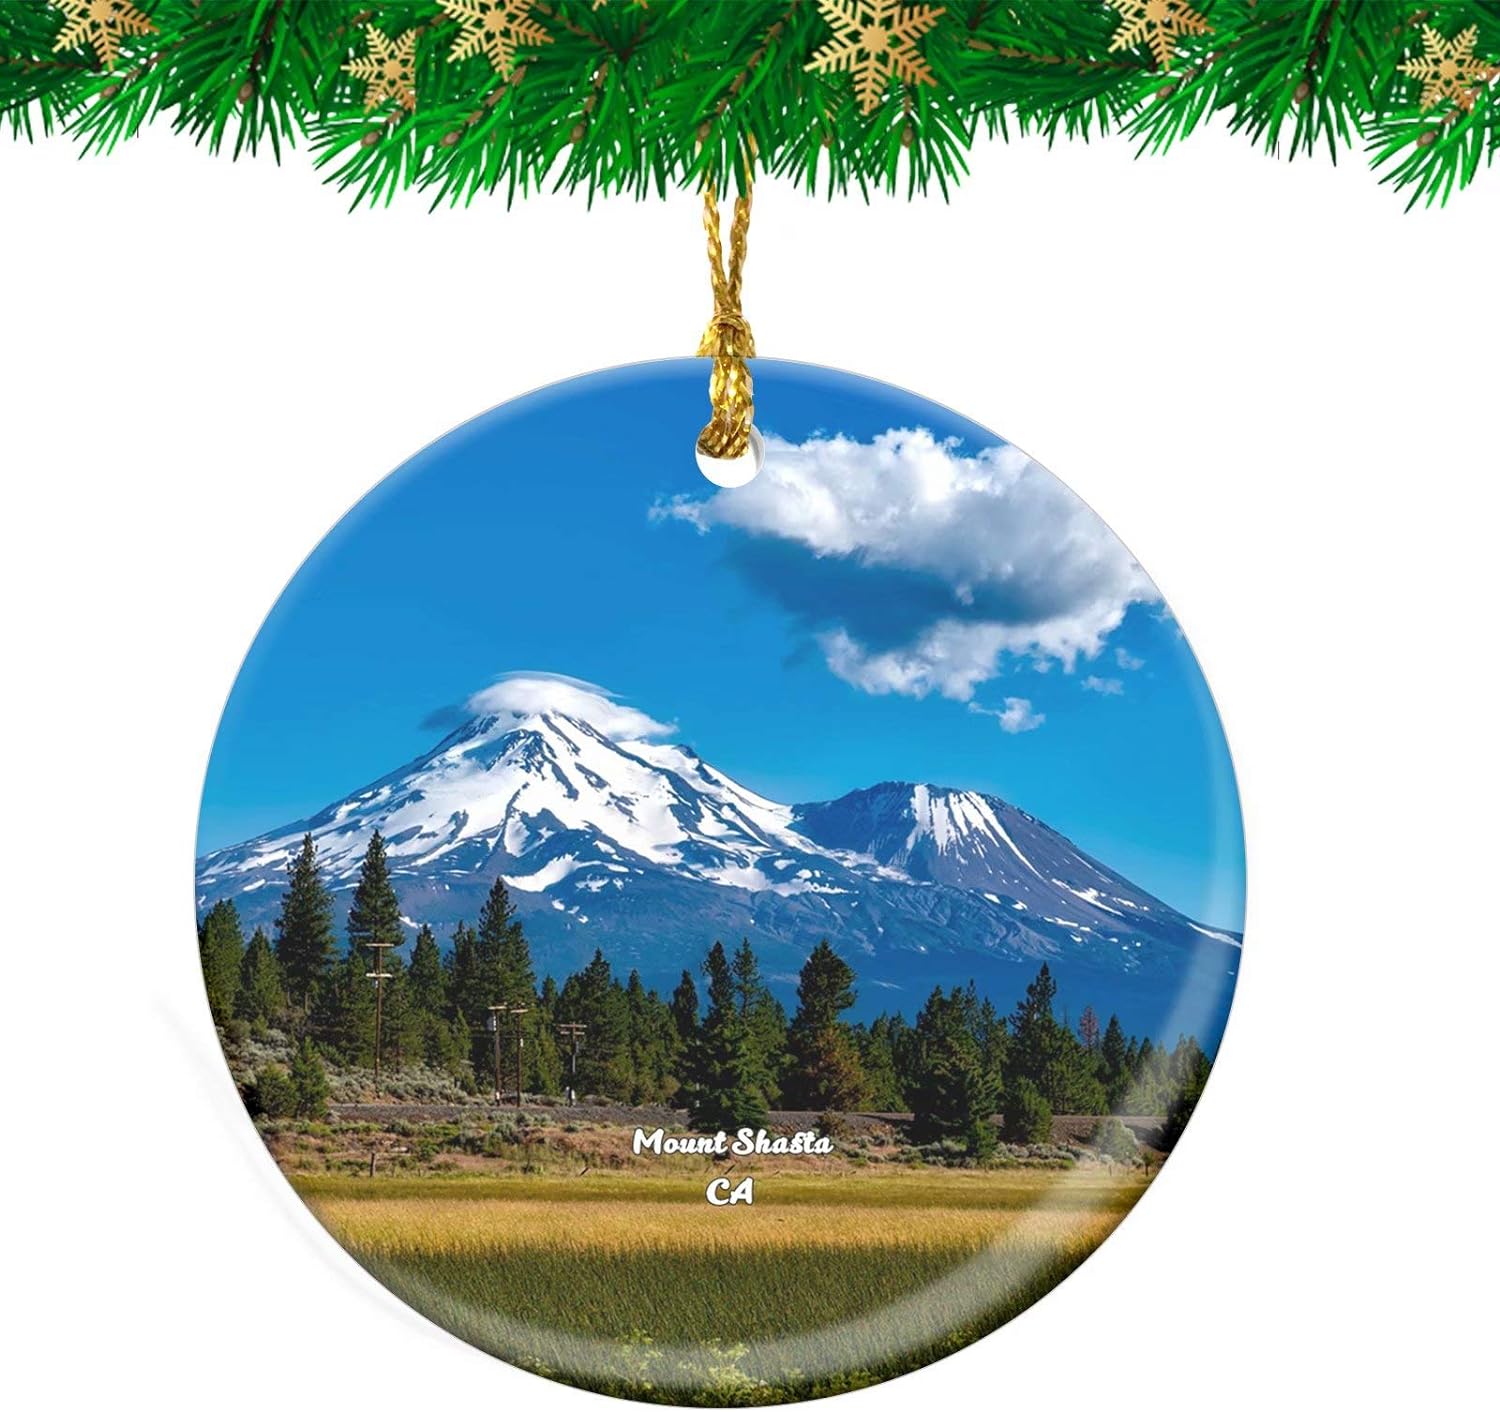 Mount Shasta California USA Christmas Ornament Travel Souvenir Personalized Christmas Tree Pendant Hanging Decoration